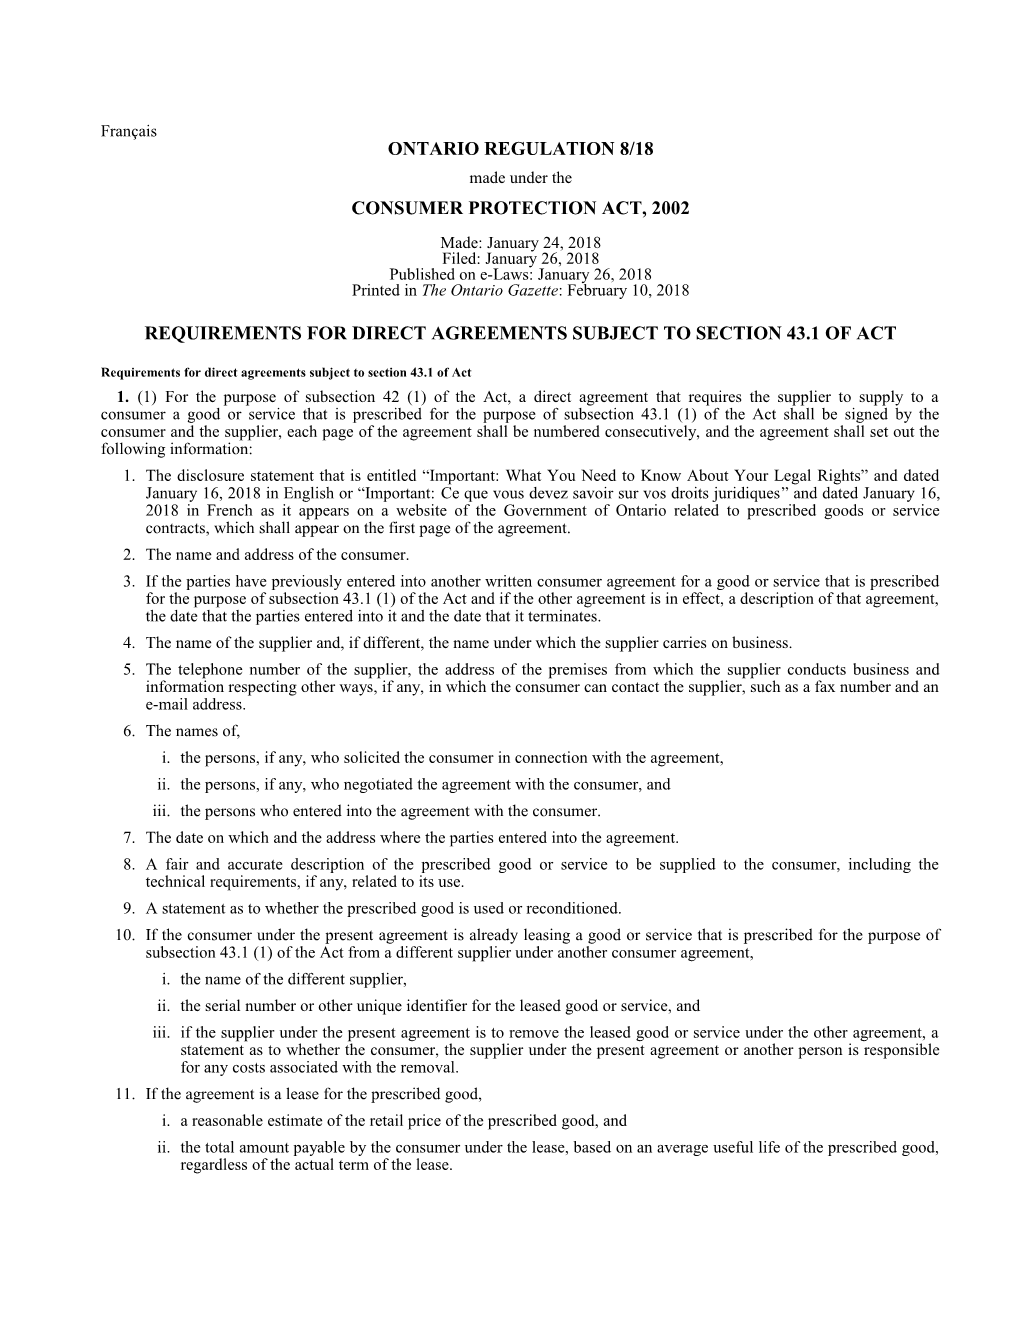 CONSUMER PROTECTION ACT, 2002 - O. Reg. 8/18